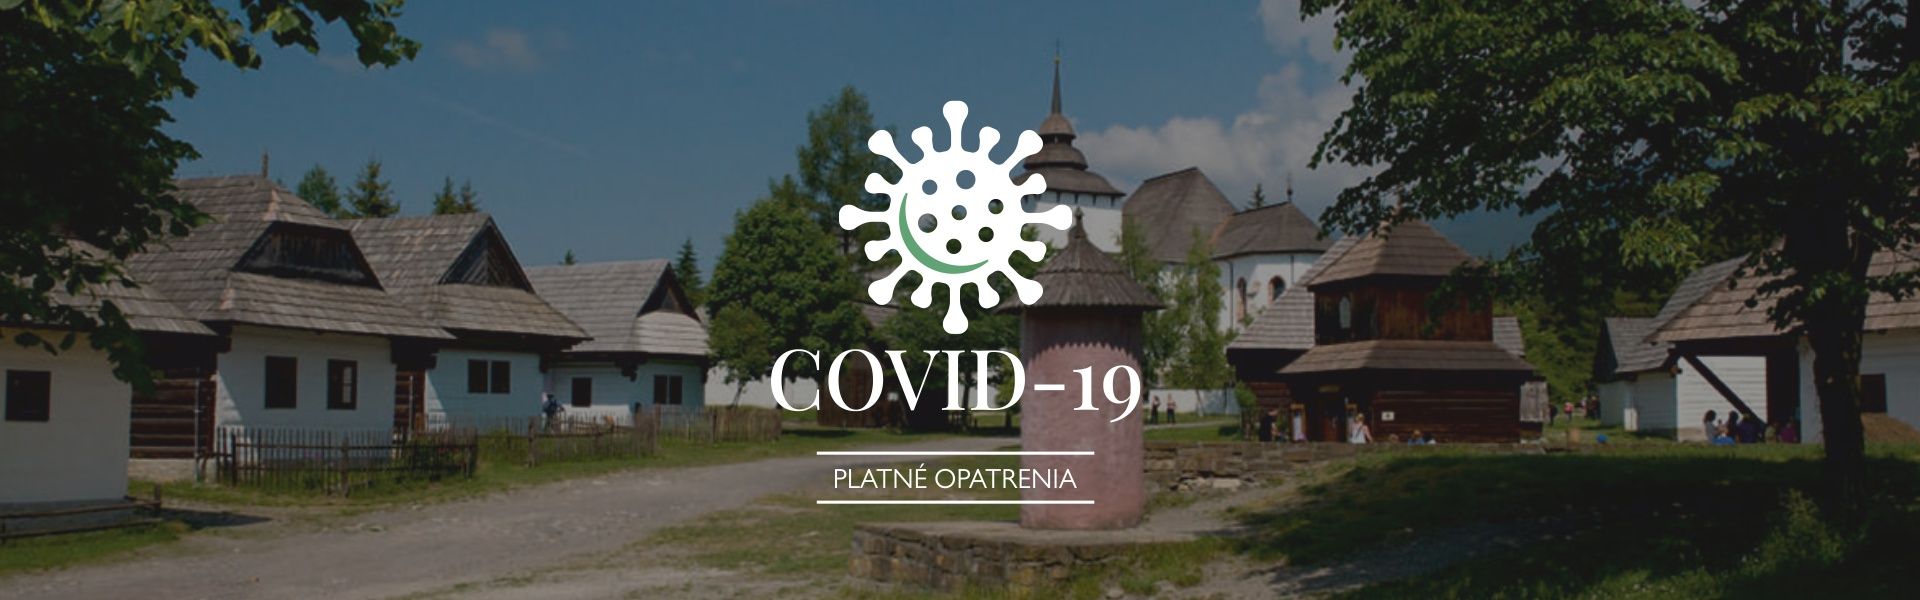 COVID-19 - Platné opatrenia v skanzene